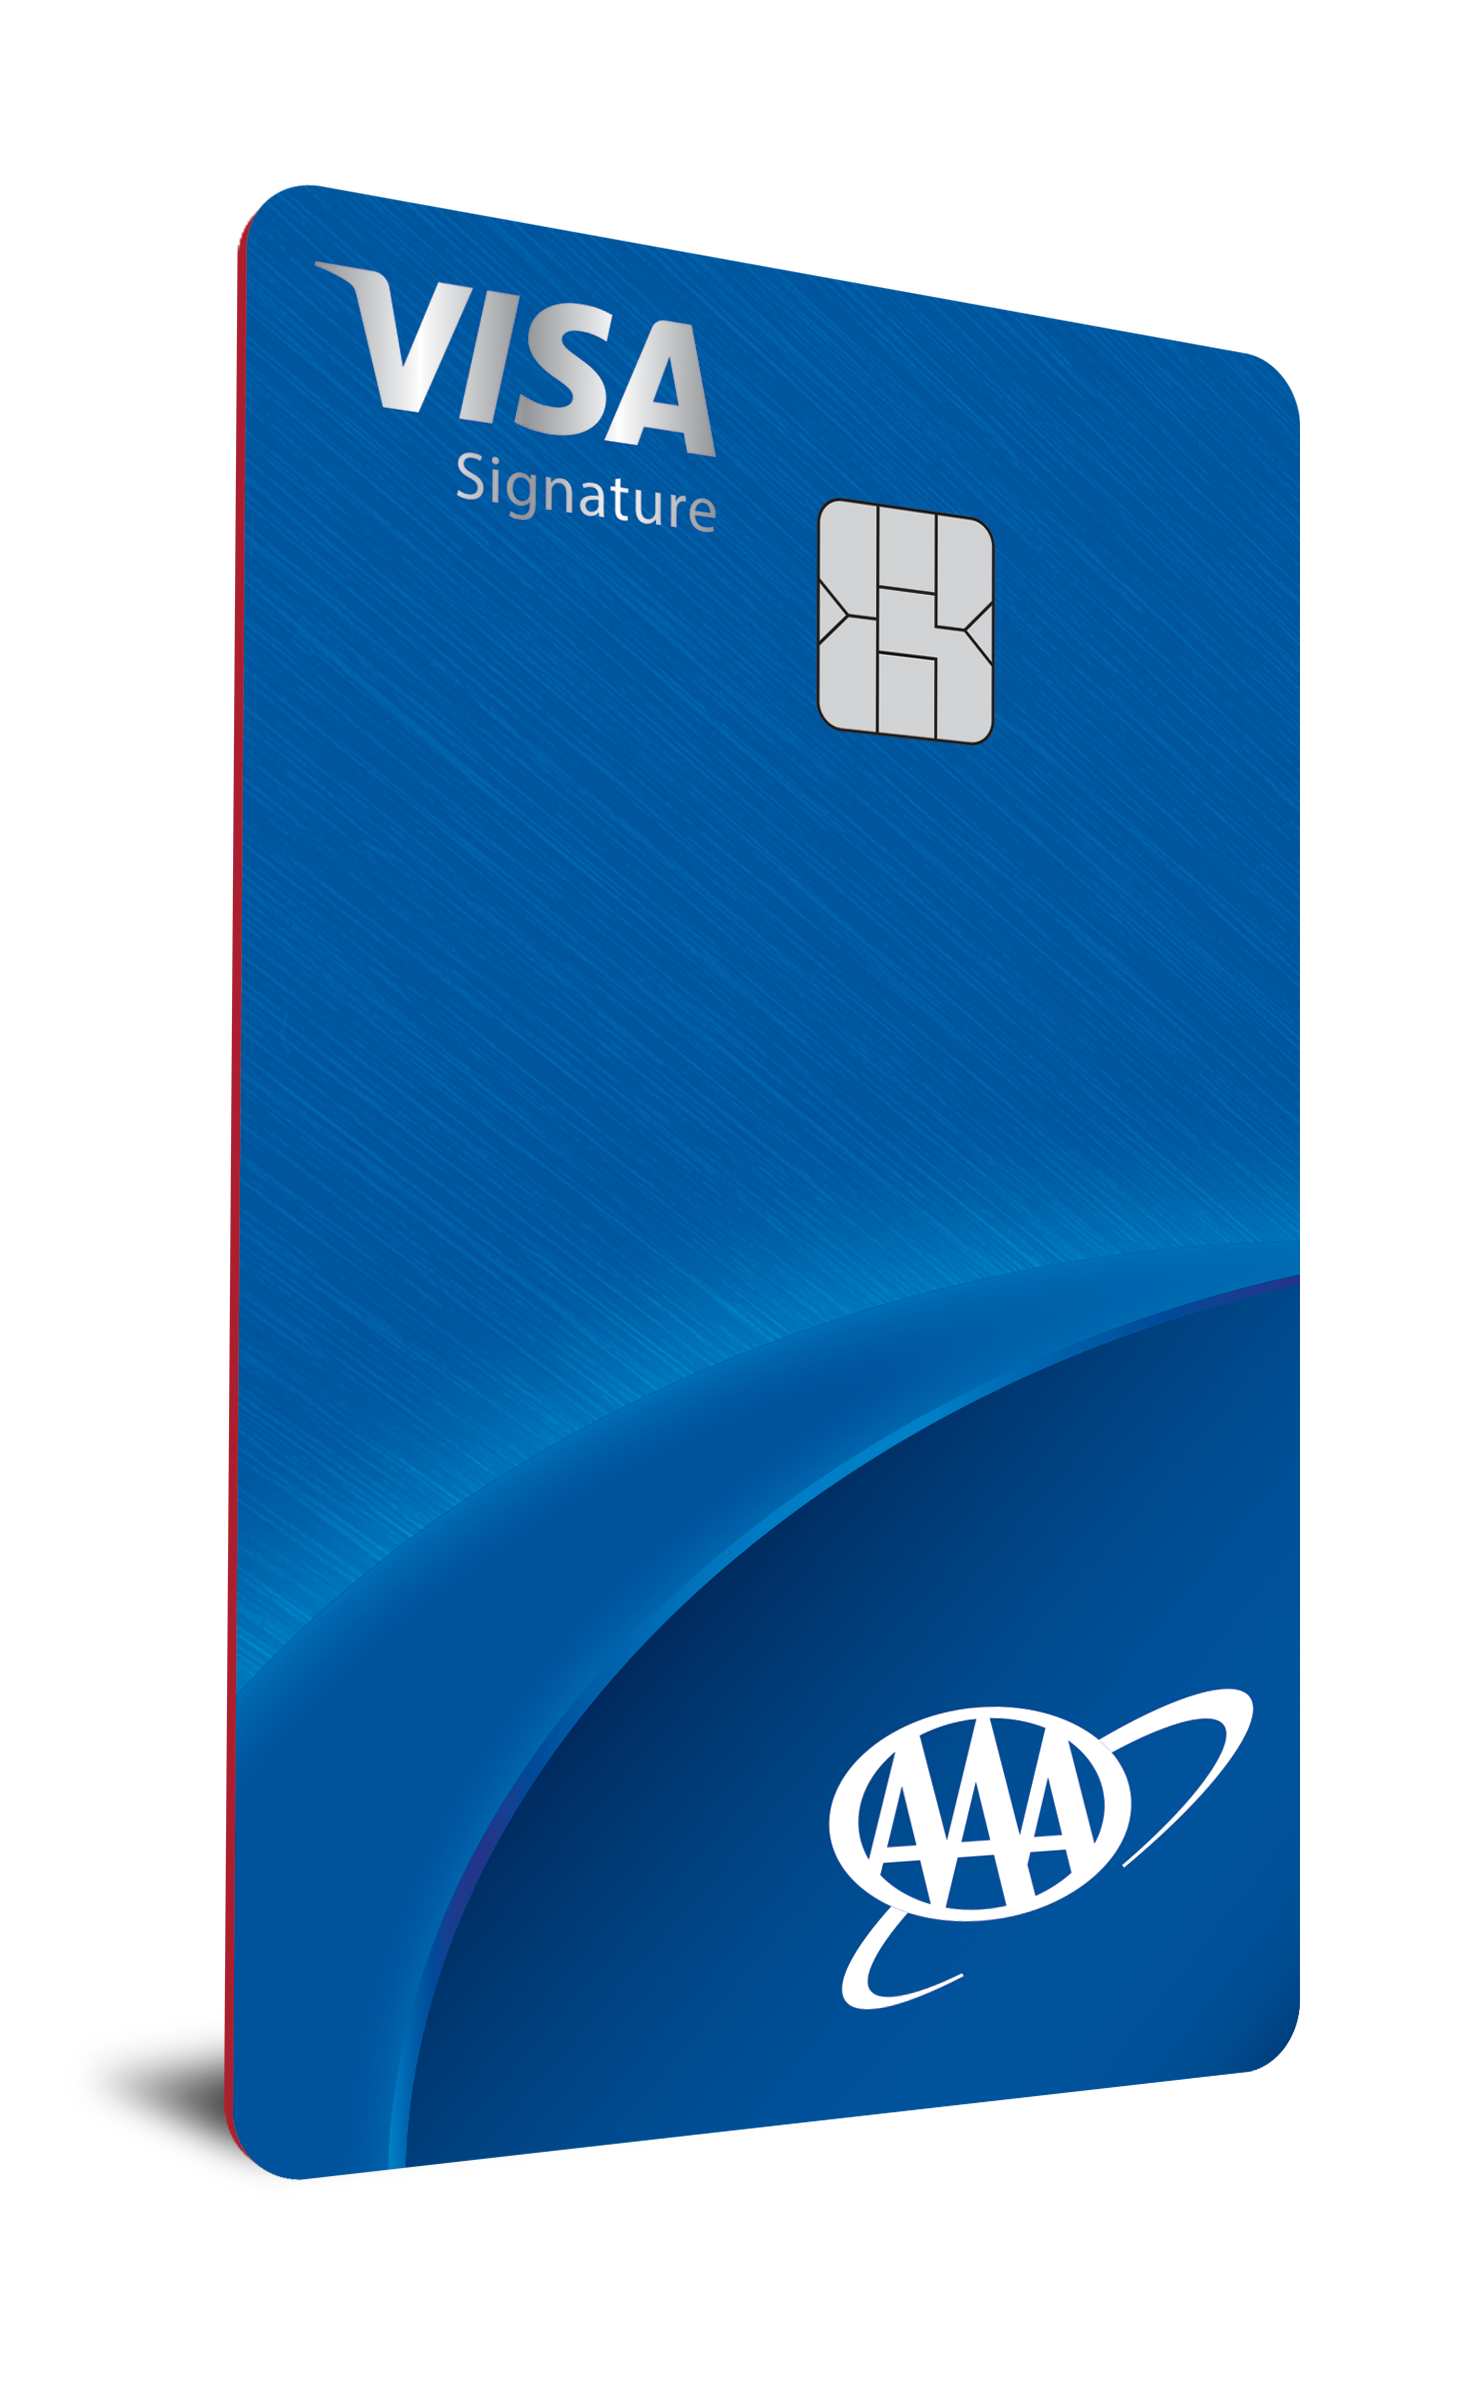 aaa-advantage-activate-login-account-aaa-visa-signature-credit